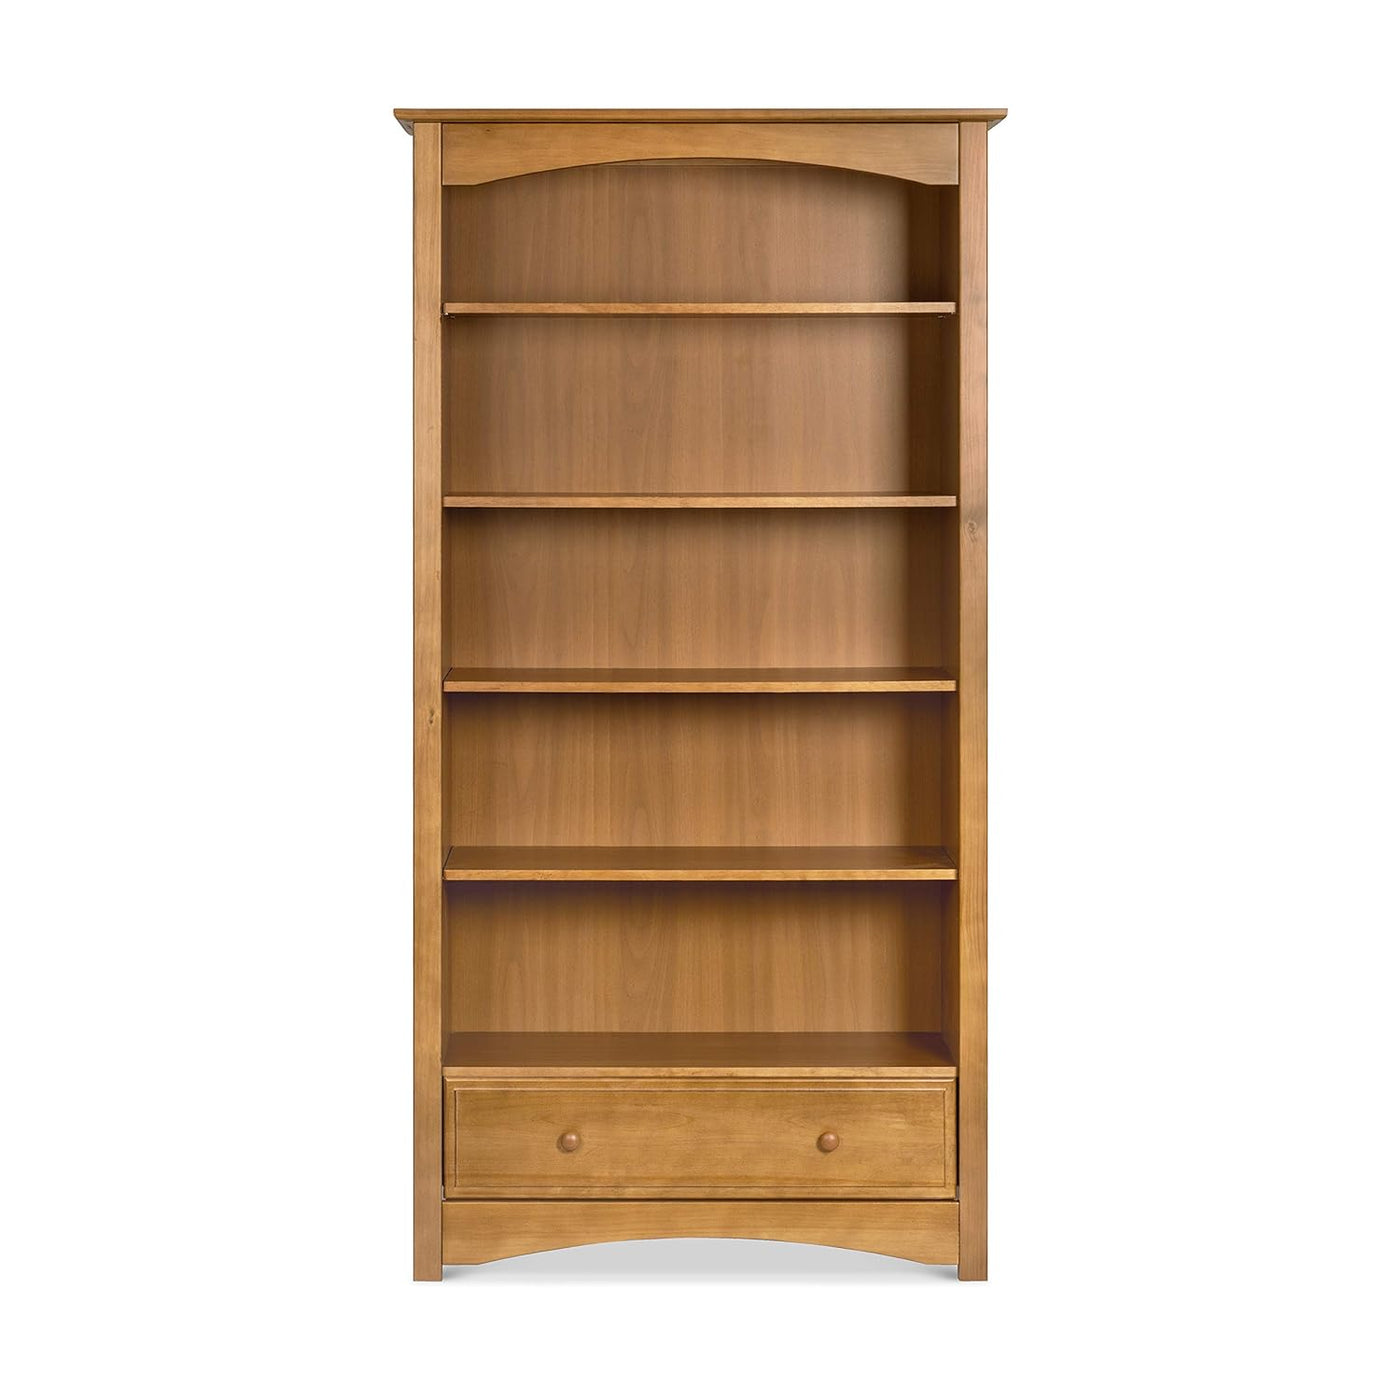 DaVinci MDB Bookcase in Chestnut - $180